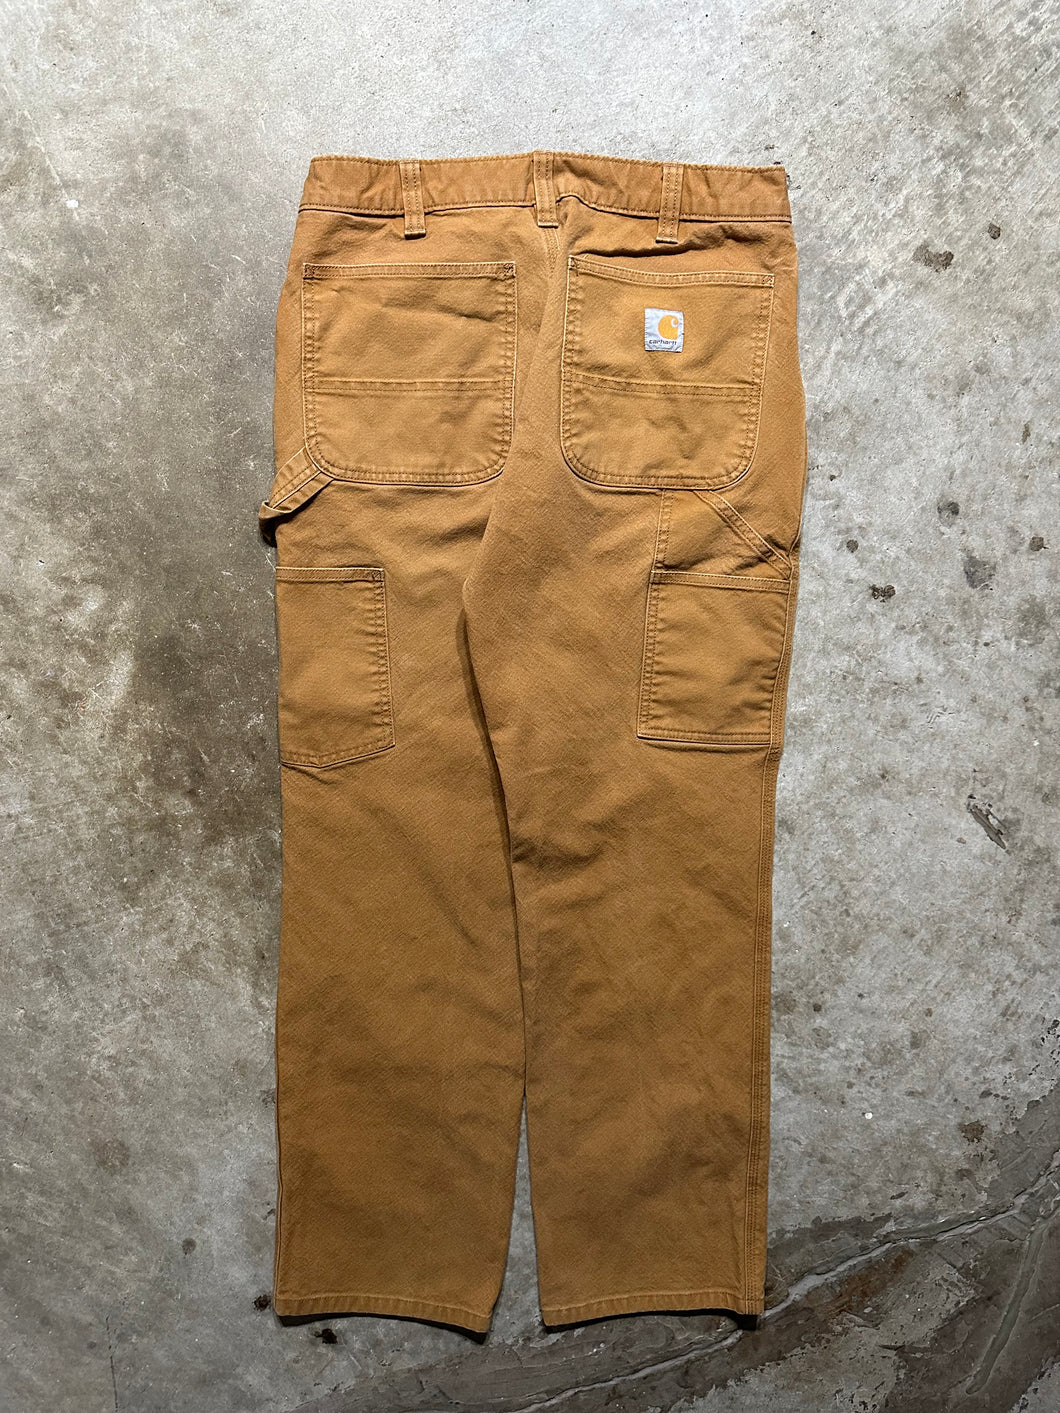 Y2K Tan Carhartt Workwear Pants (32x30)